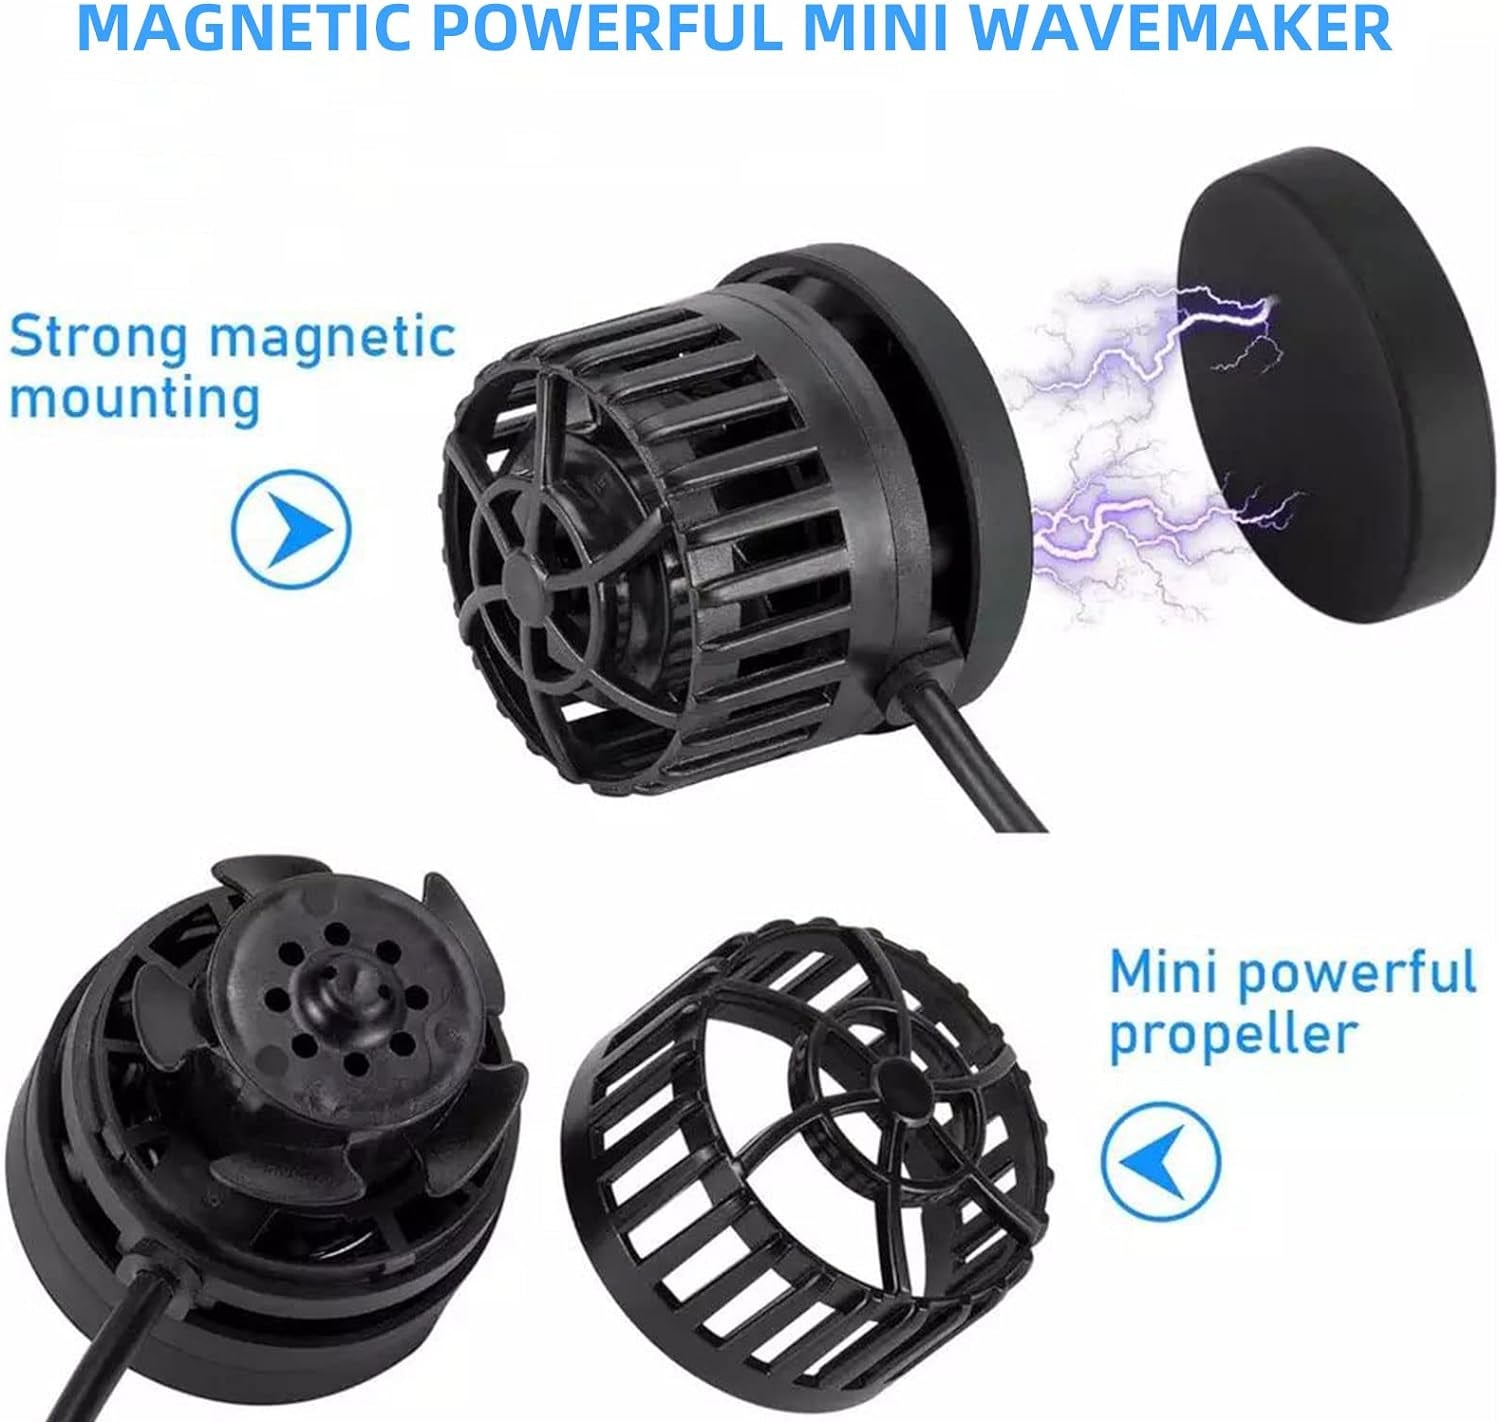 Advanced Mini Wave Maker with LED Display